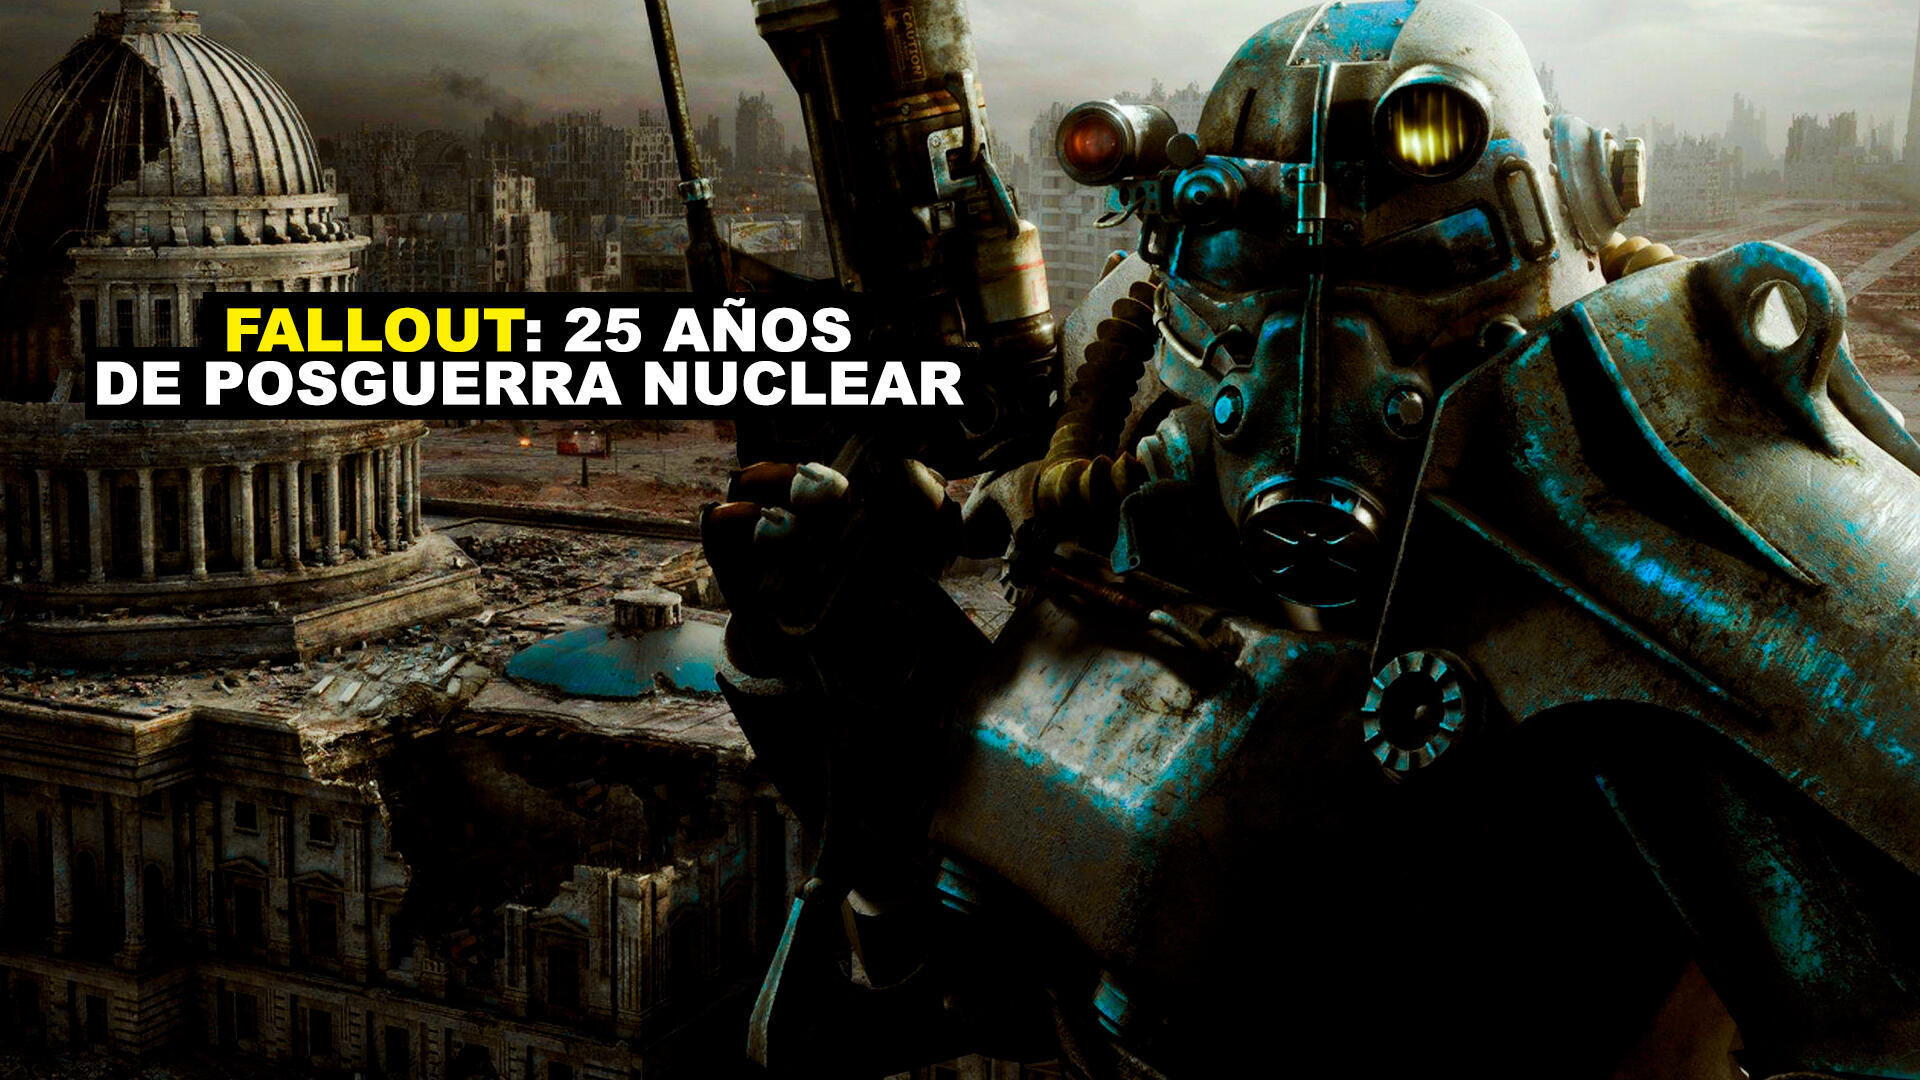 Fallout: 25 aos de posguerra nuclear